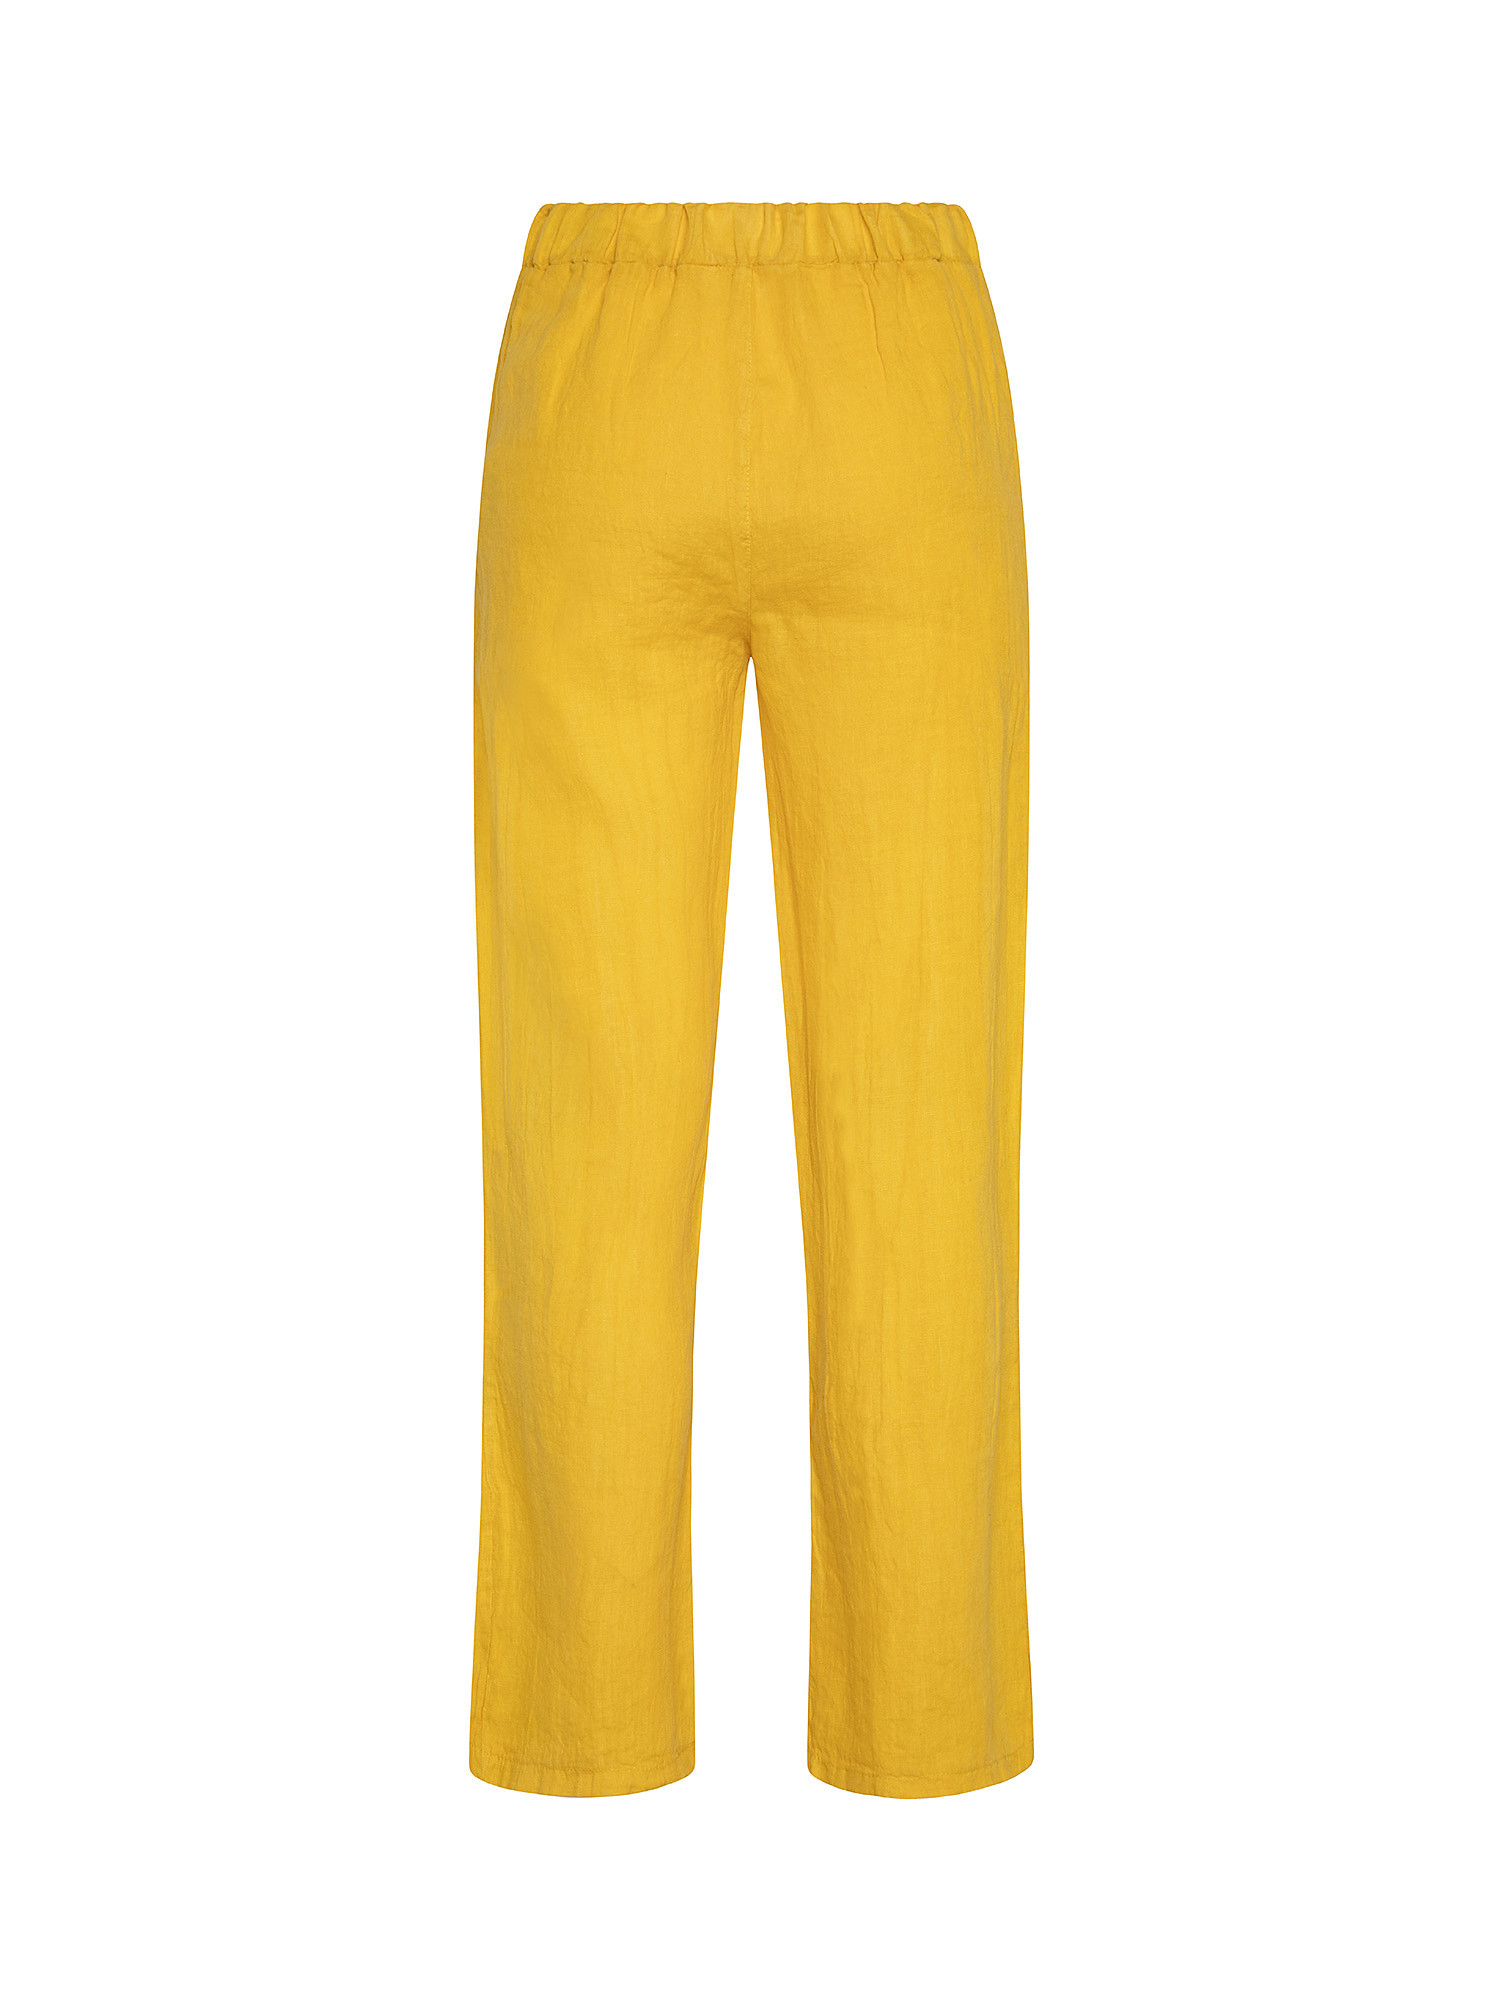 Pantalone puro lino con spacco, Giallo, large image number 1